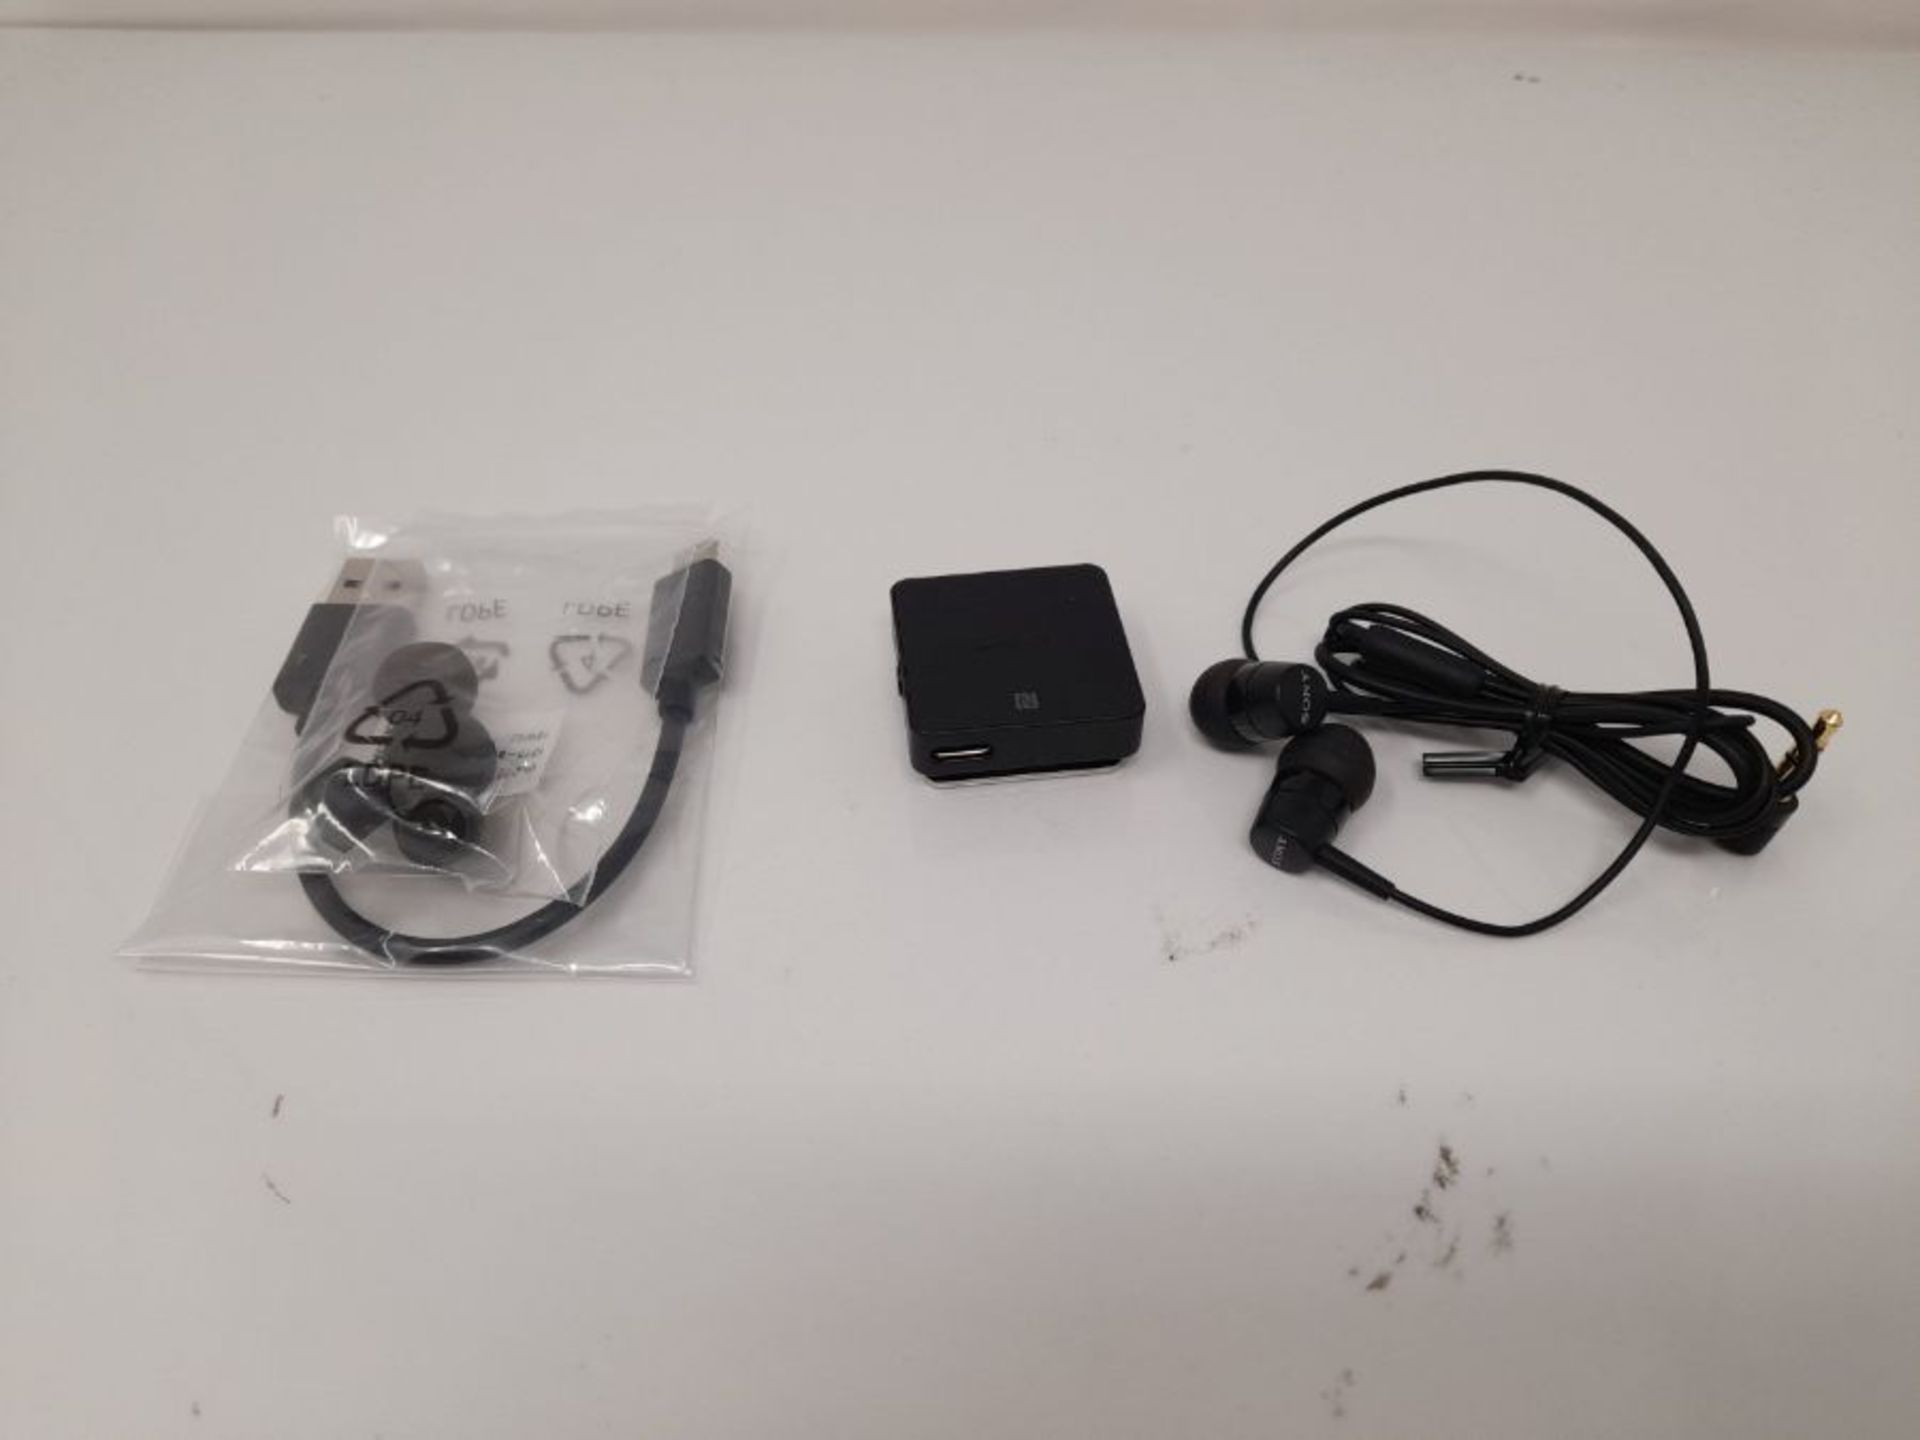 Sony SBH24 Stereo Bluetooth Headset - Black - Image 2 of 2